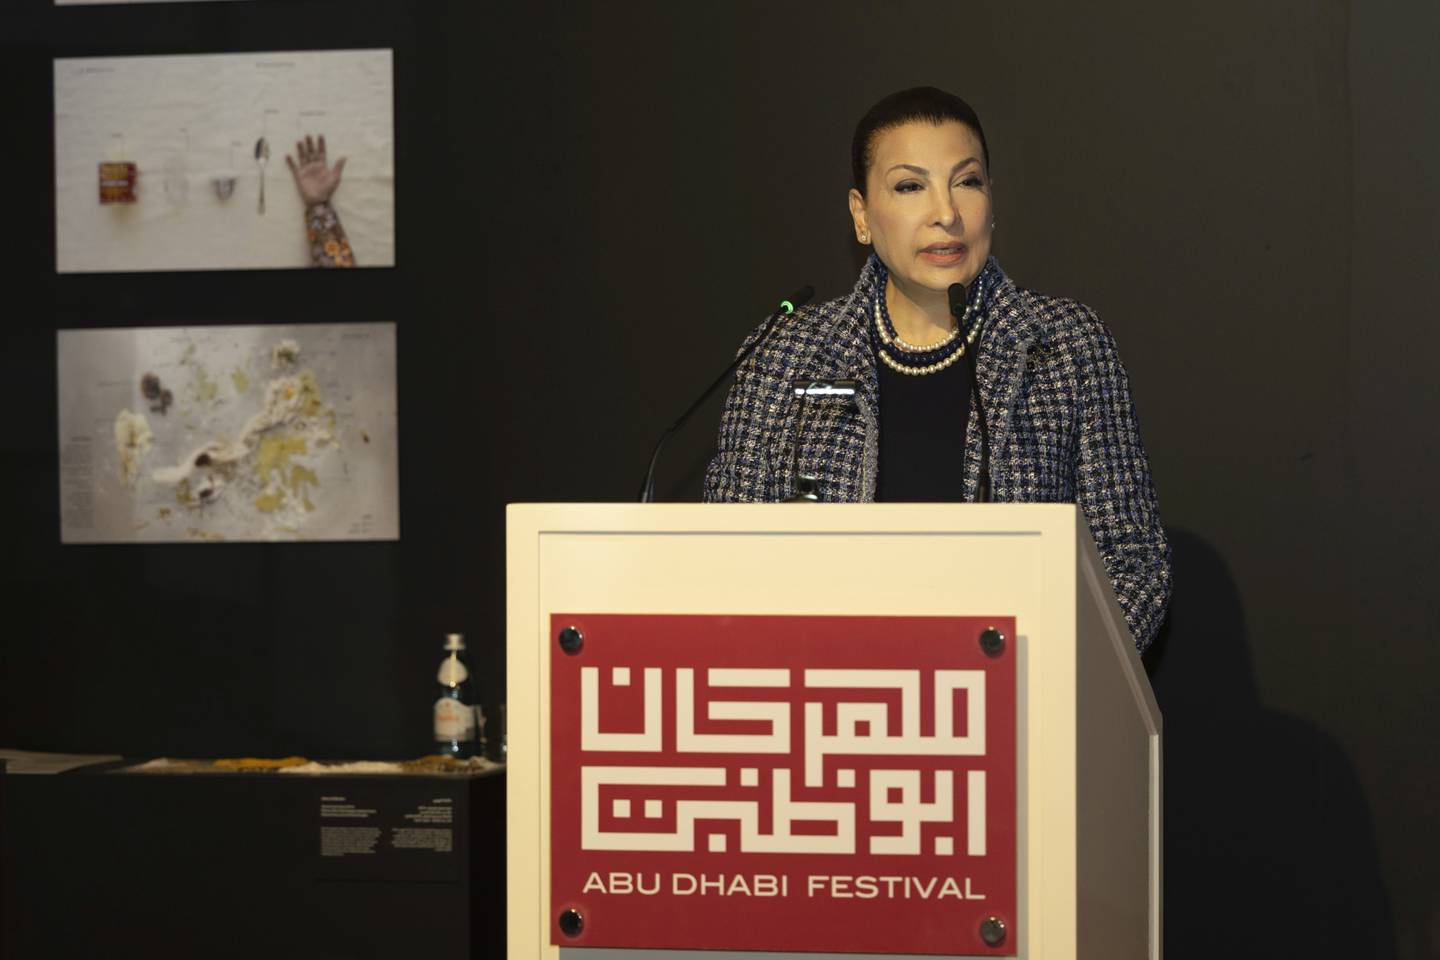 Huda Alkhamis-Kanoo, founder of the Abu Dhabi Music and Arts Foundation and artistic director of the Abu Dhabi Festival. Photo: Admaf